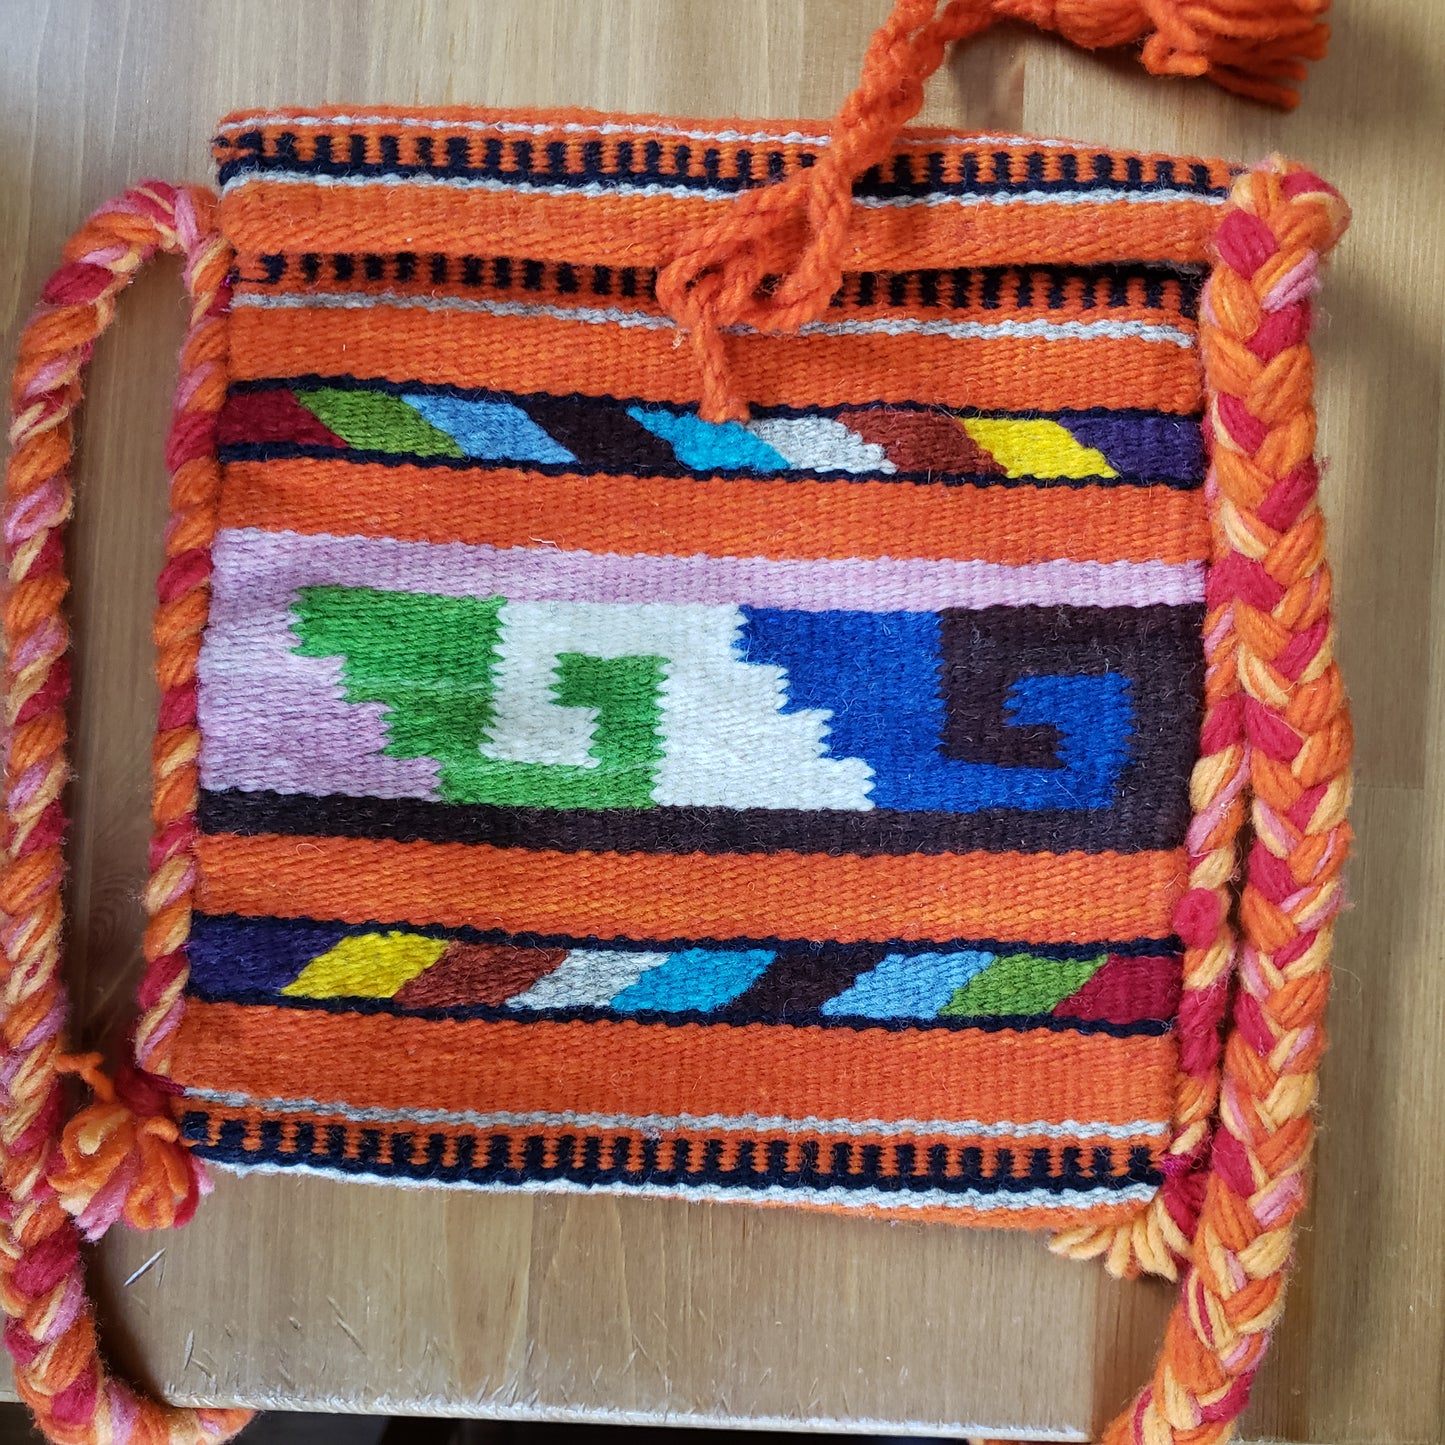 Orange Multi Color Woven Bag from Oaxaca